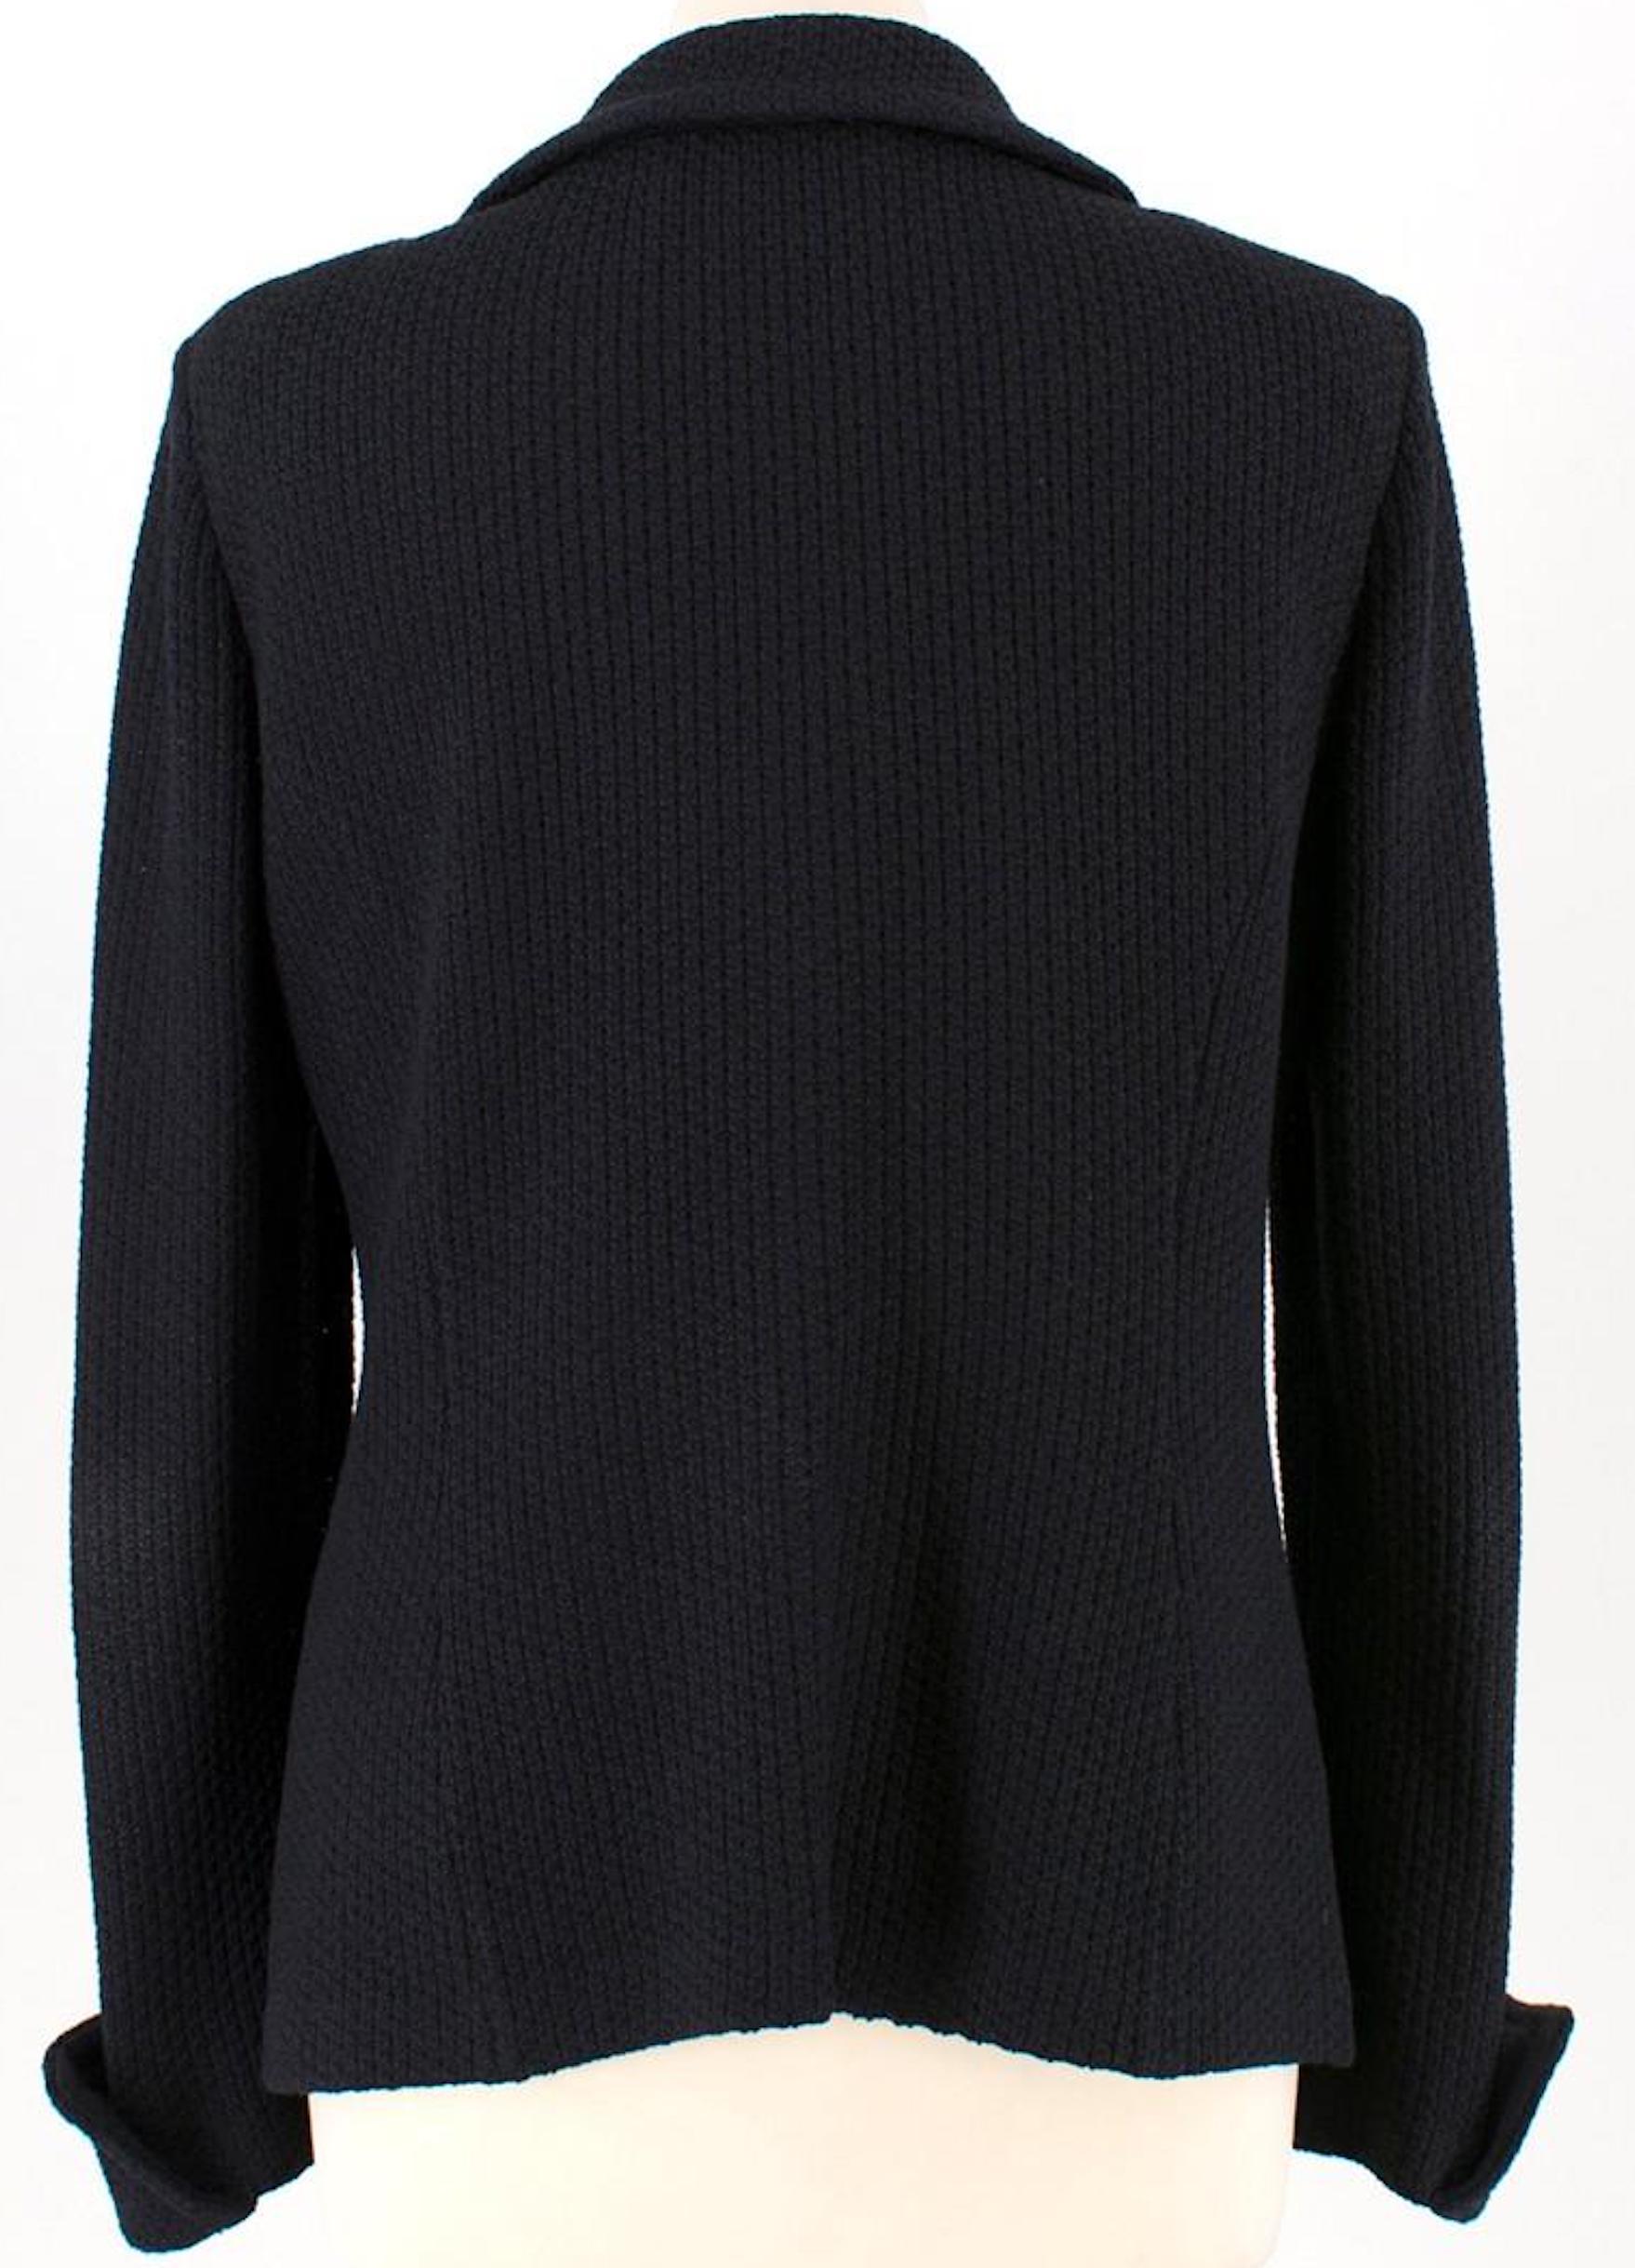 Vintage St John Caviar Black Knit Wool Blazer and Skirt Suit For Sale 10